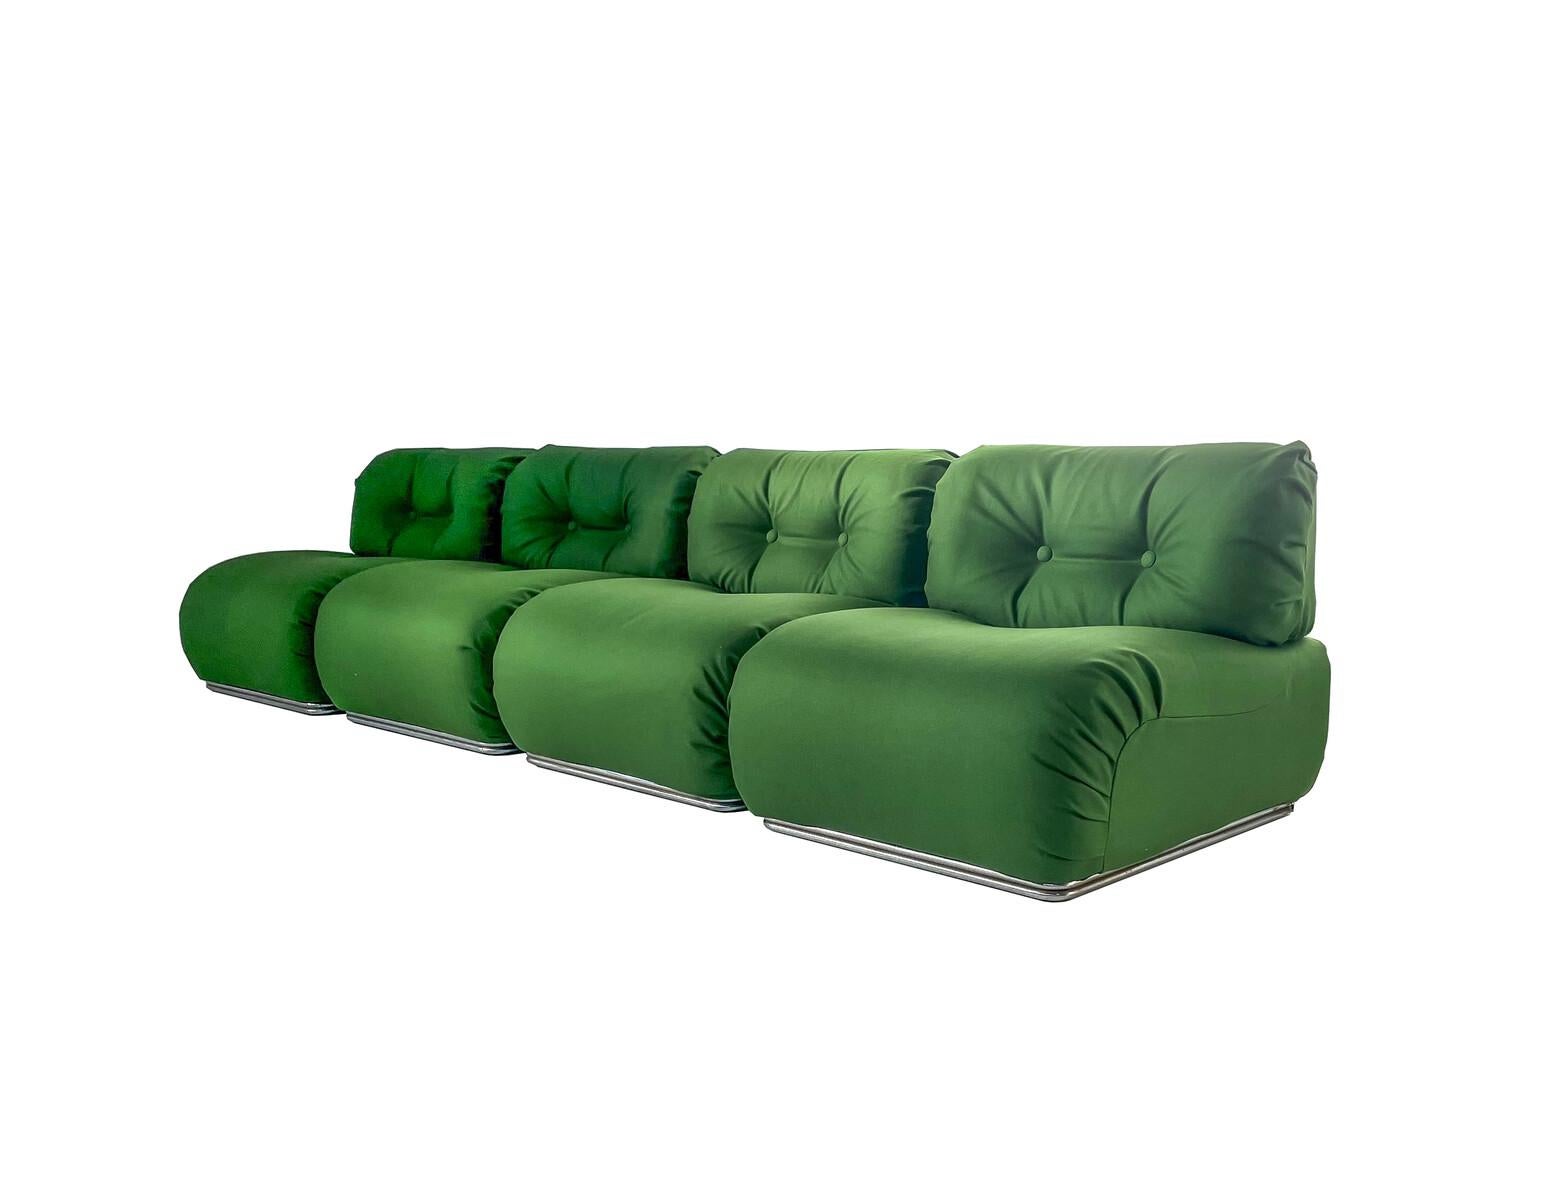 Mid-Century Modern Green Italian Modular sofa, 1960s.
Each element is sold individually 